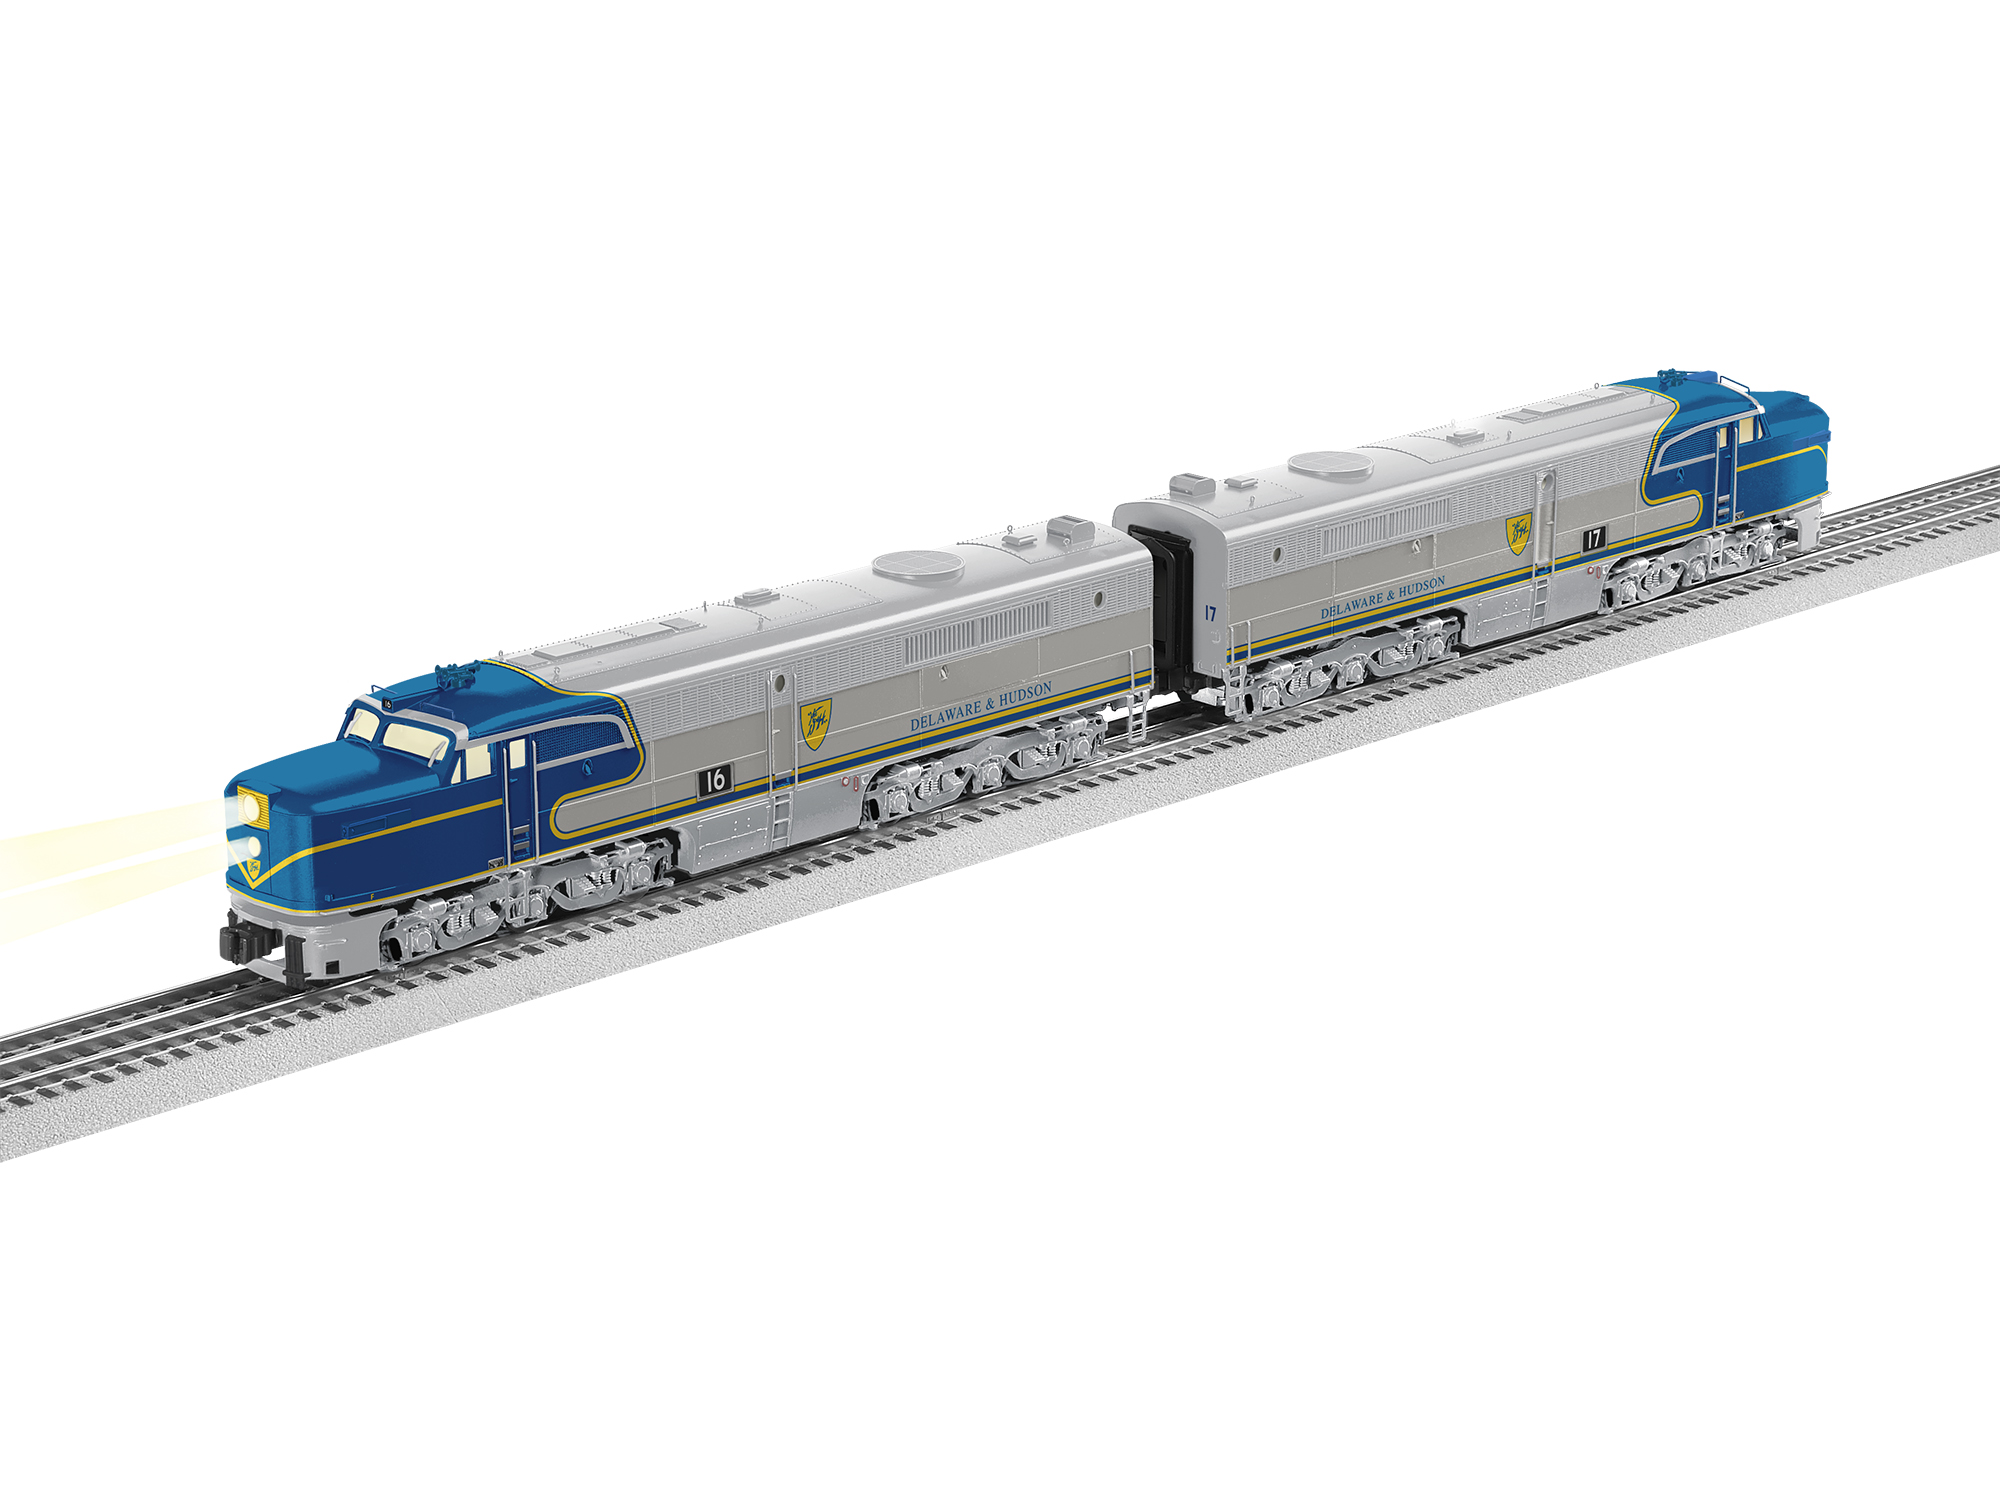 Model Trains Delaware Hudson